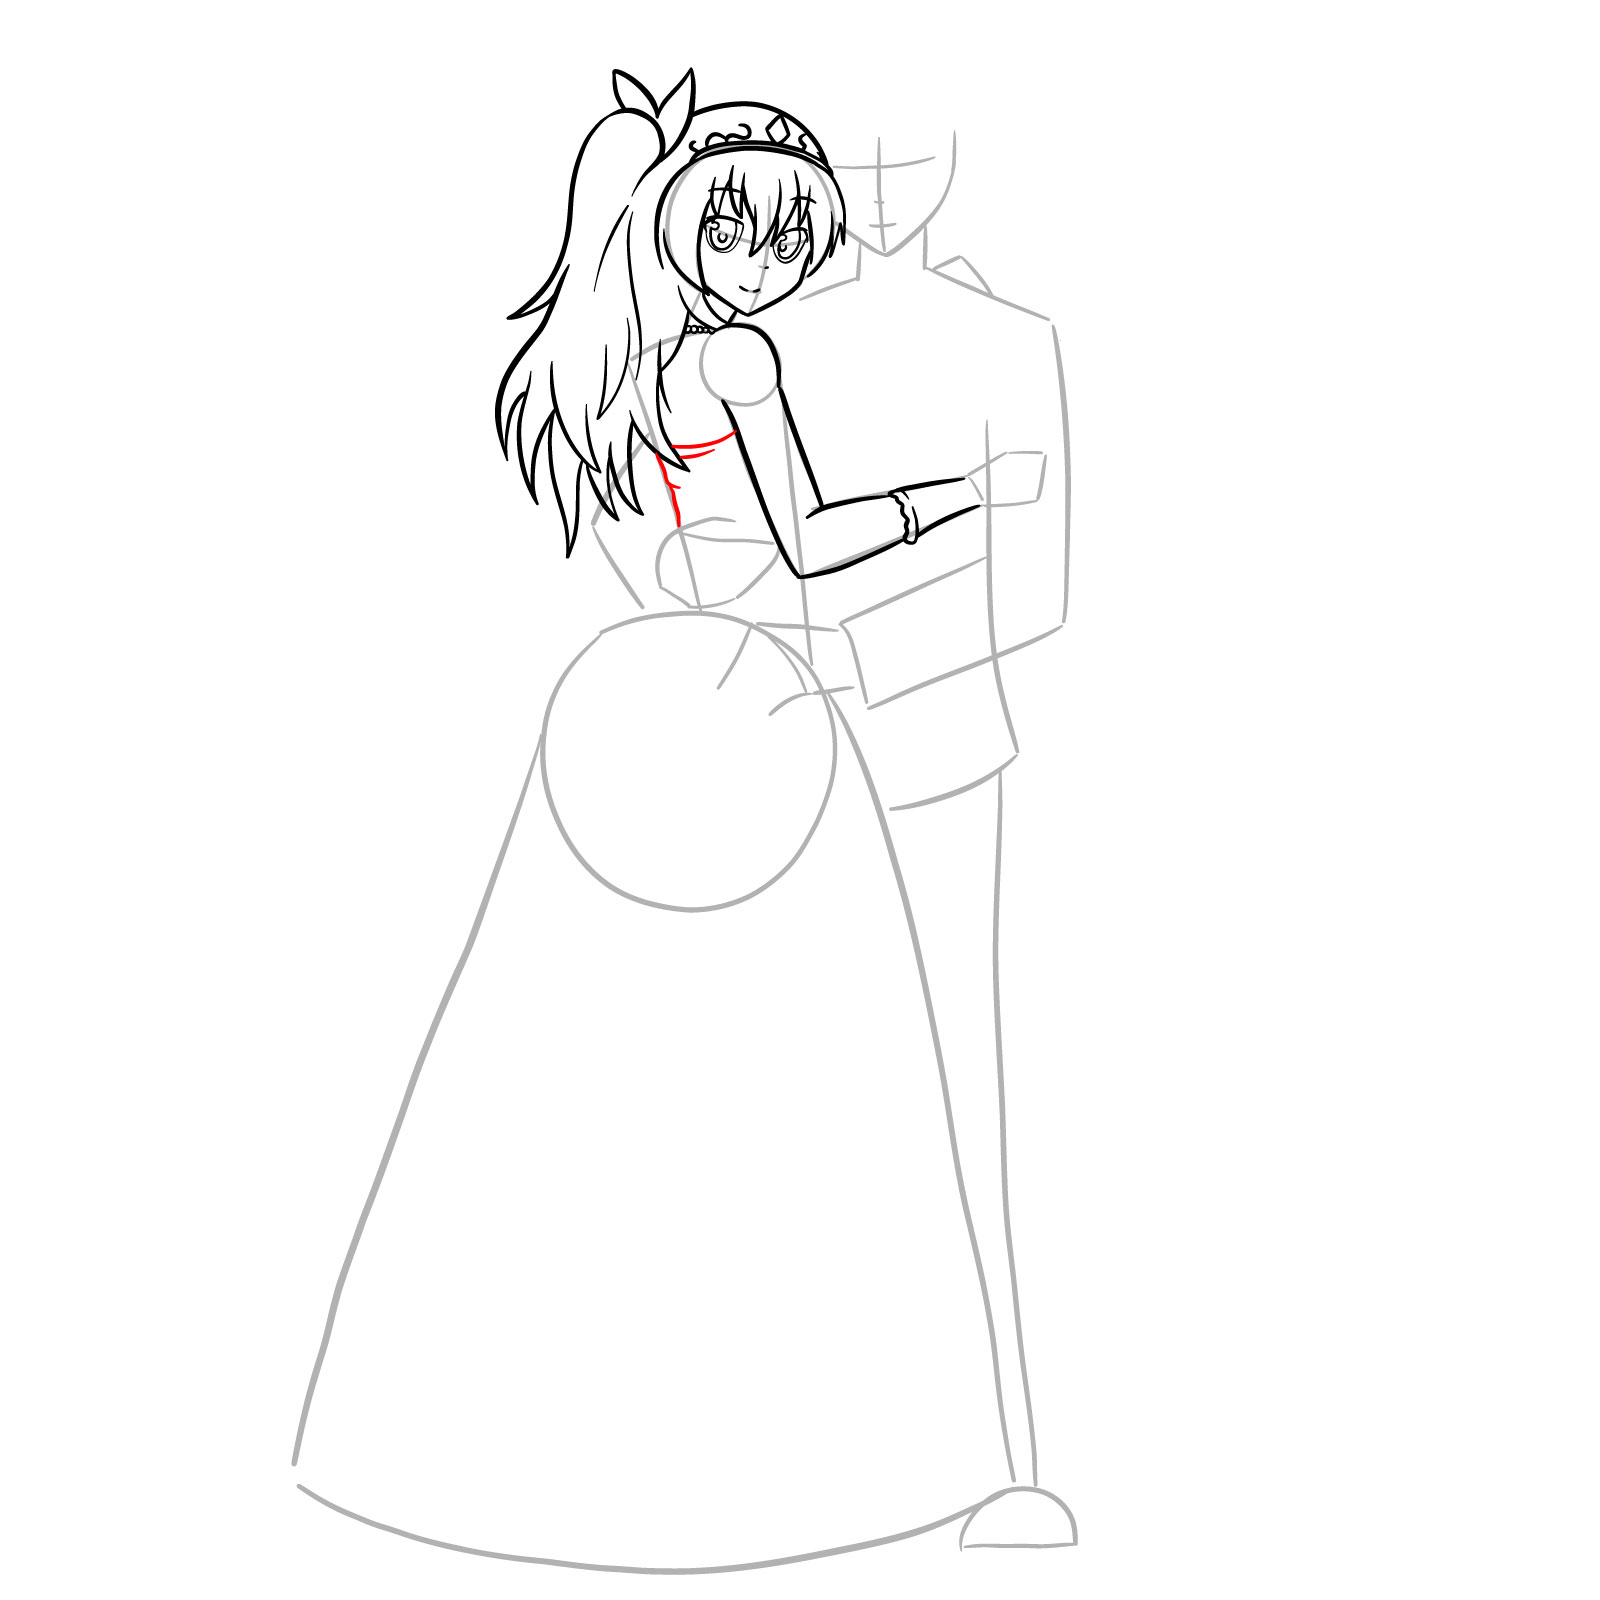 How to draw Ikki and Stella's wedding - step 18